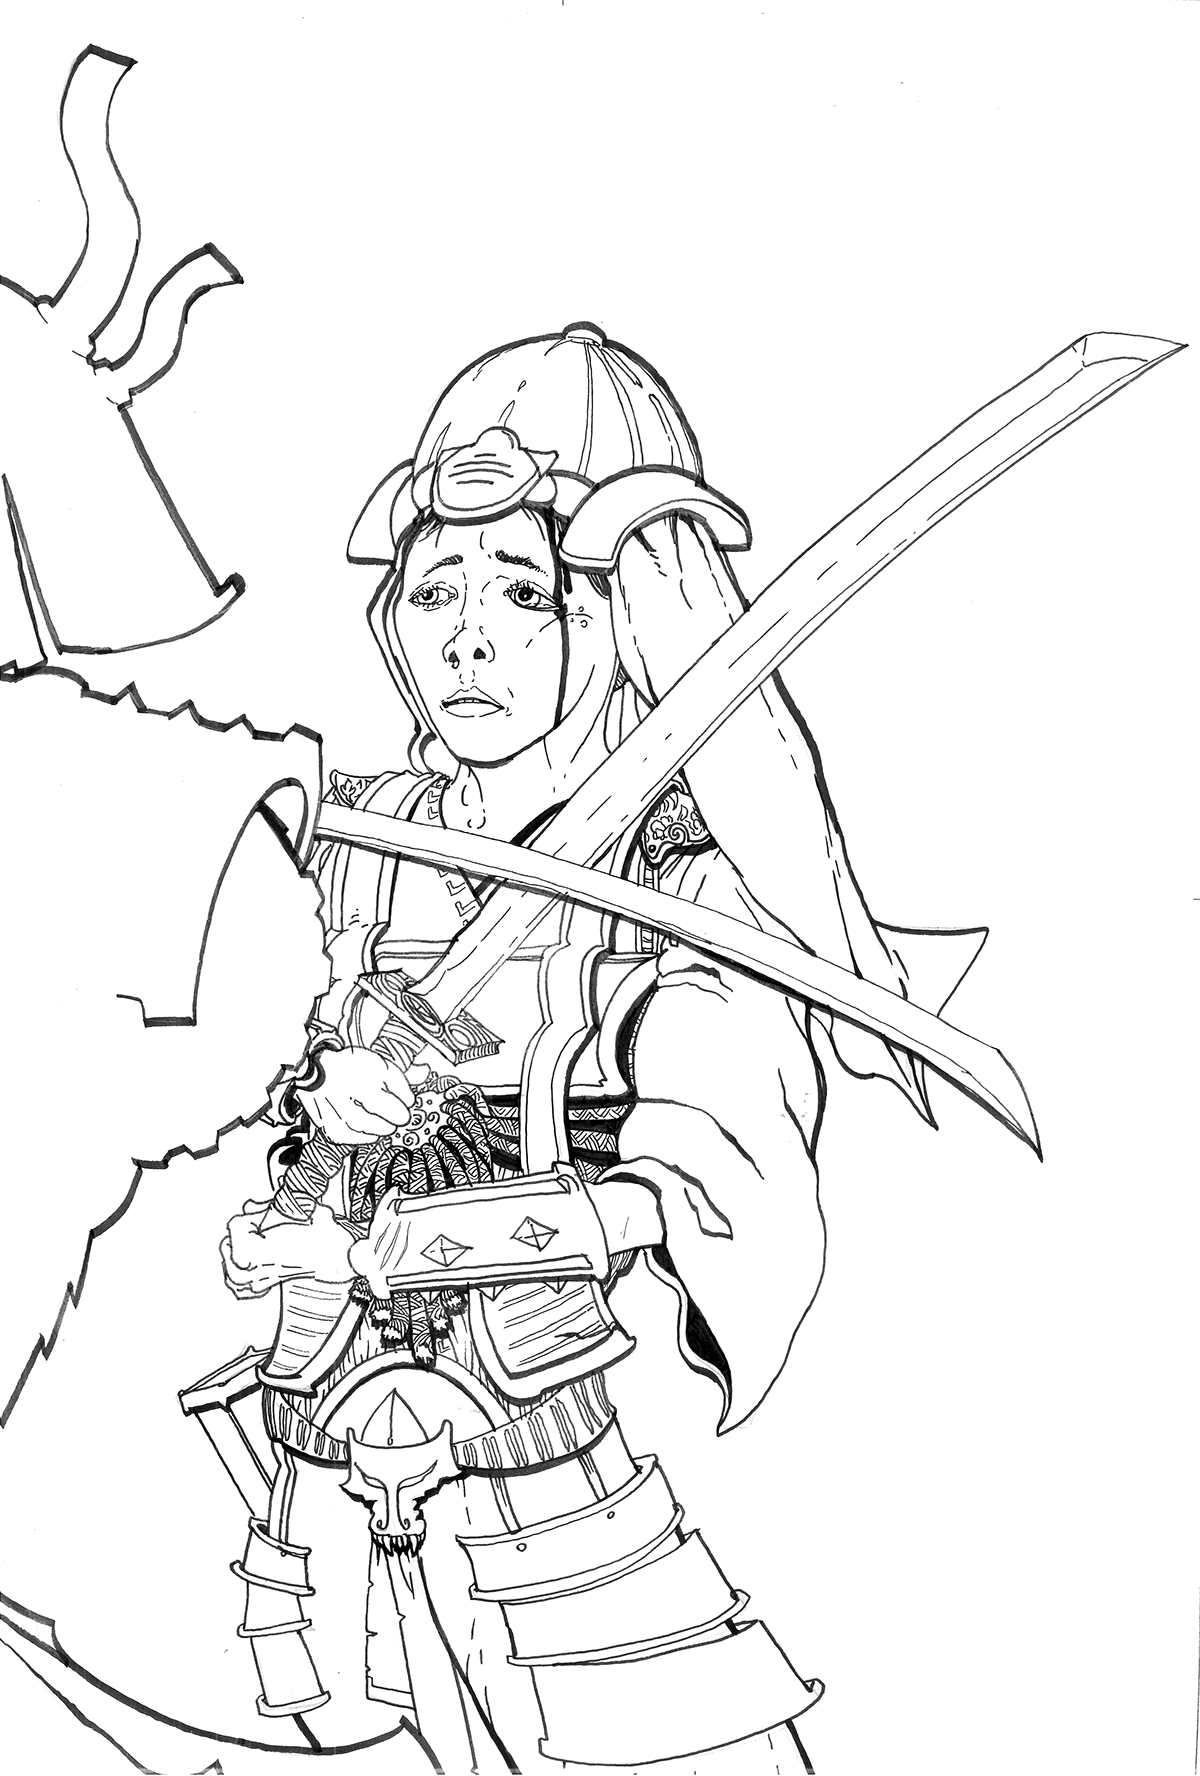 woman japan samurai Hero katana Competition giocomix accademiadarte santacaterina warrior